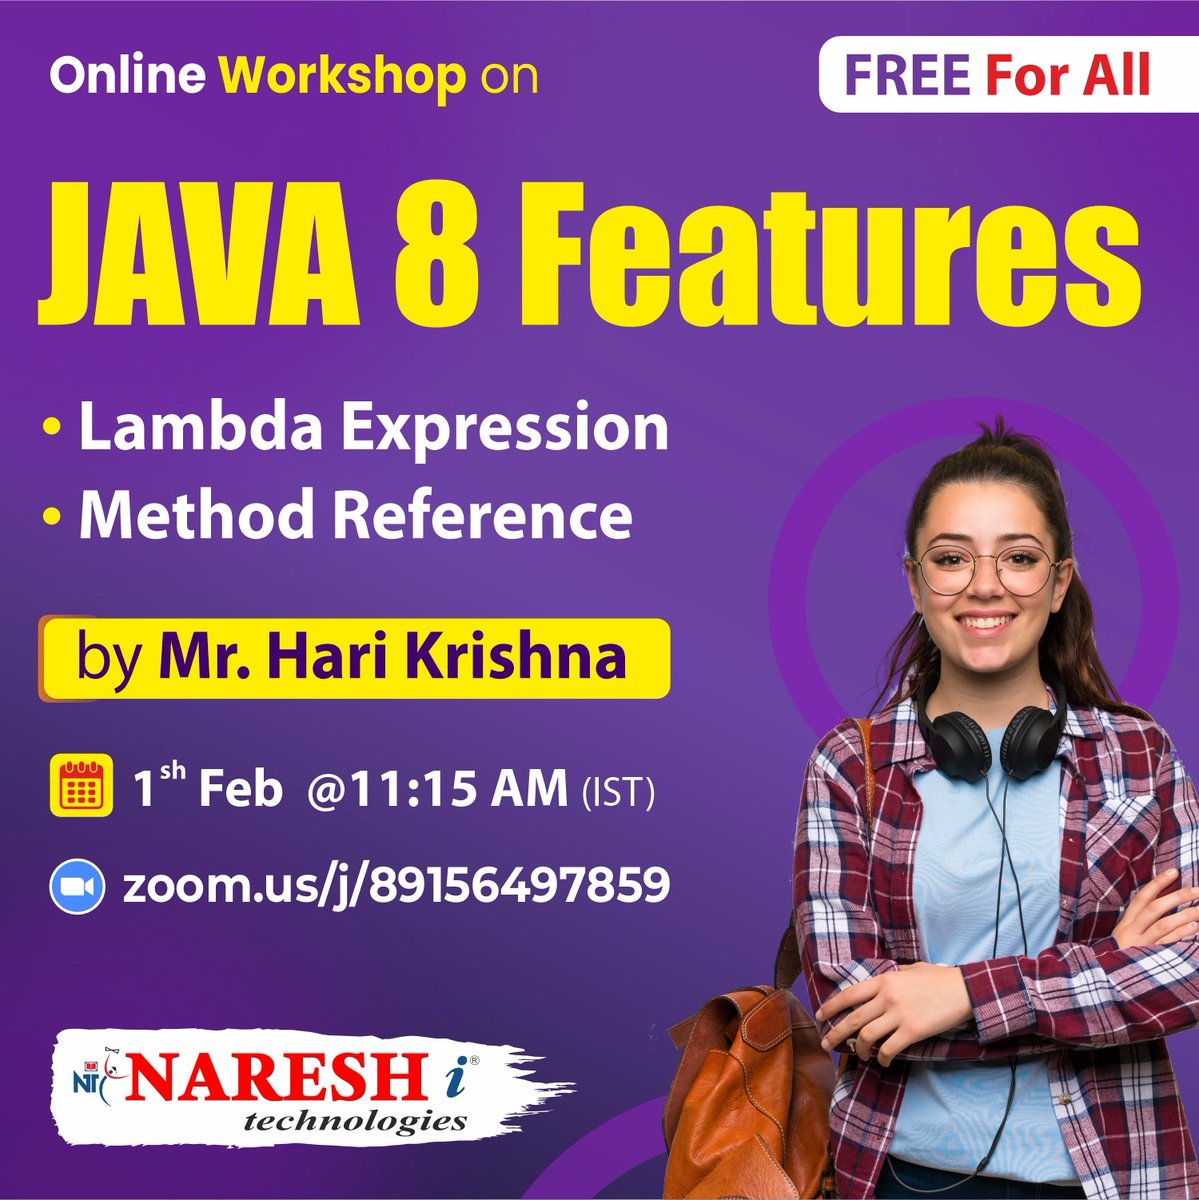 🛑 FREE FOR ALL 🛑
✍️Enroll Now: bit.ly/49g8Roh
👉Attend a Free Online Workshop on Java 8 Features by Mr. Hari Krishna.
📅Live On: 01st February @ 11:15 AM (IST)

#JAVA8 #fullstackjava #Corejava #java #programming  #selenium   #workshop  #python #sql #sqldatabase